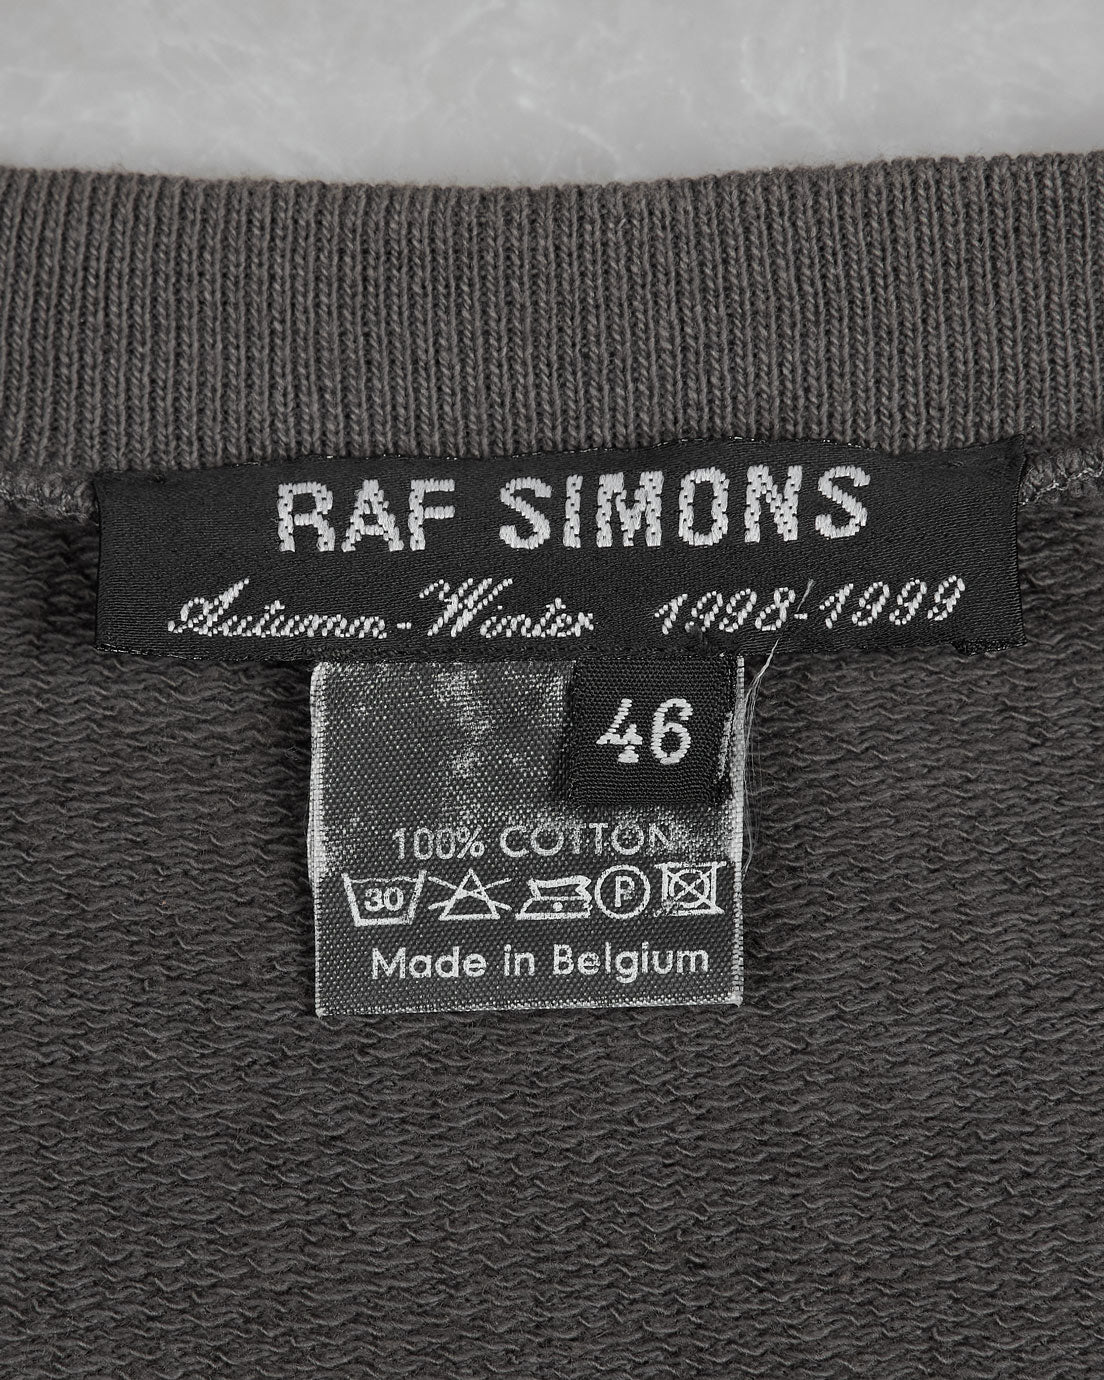 Raf Simons “Radioactivity” Raglan Sweatshirt - AW98 “Radioactivity